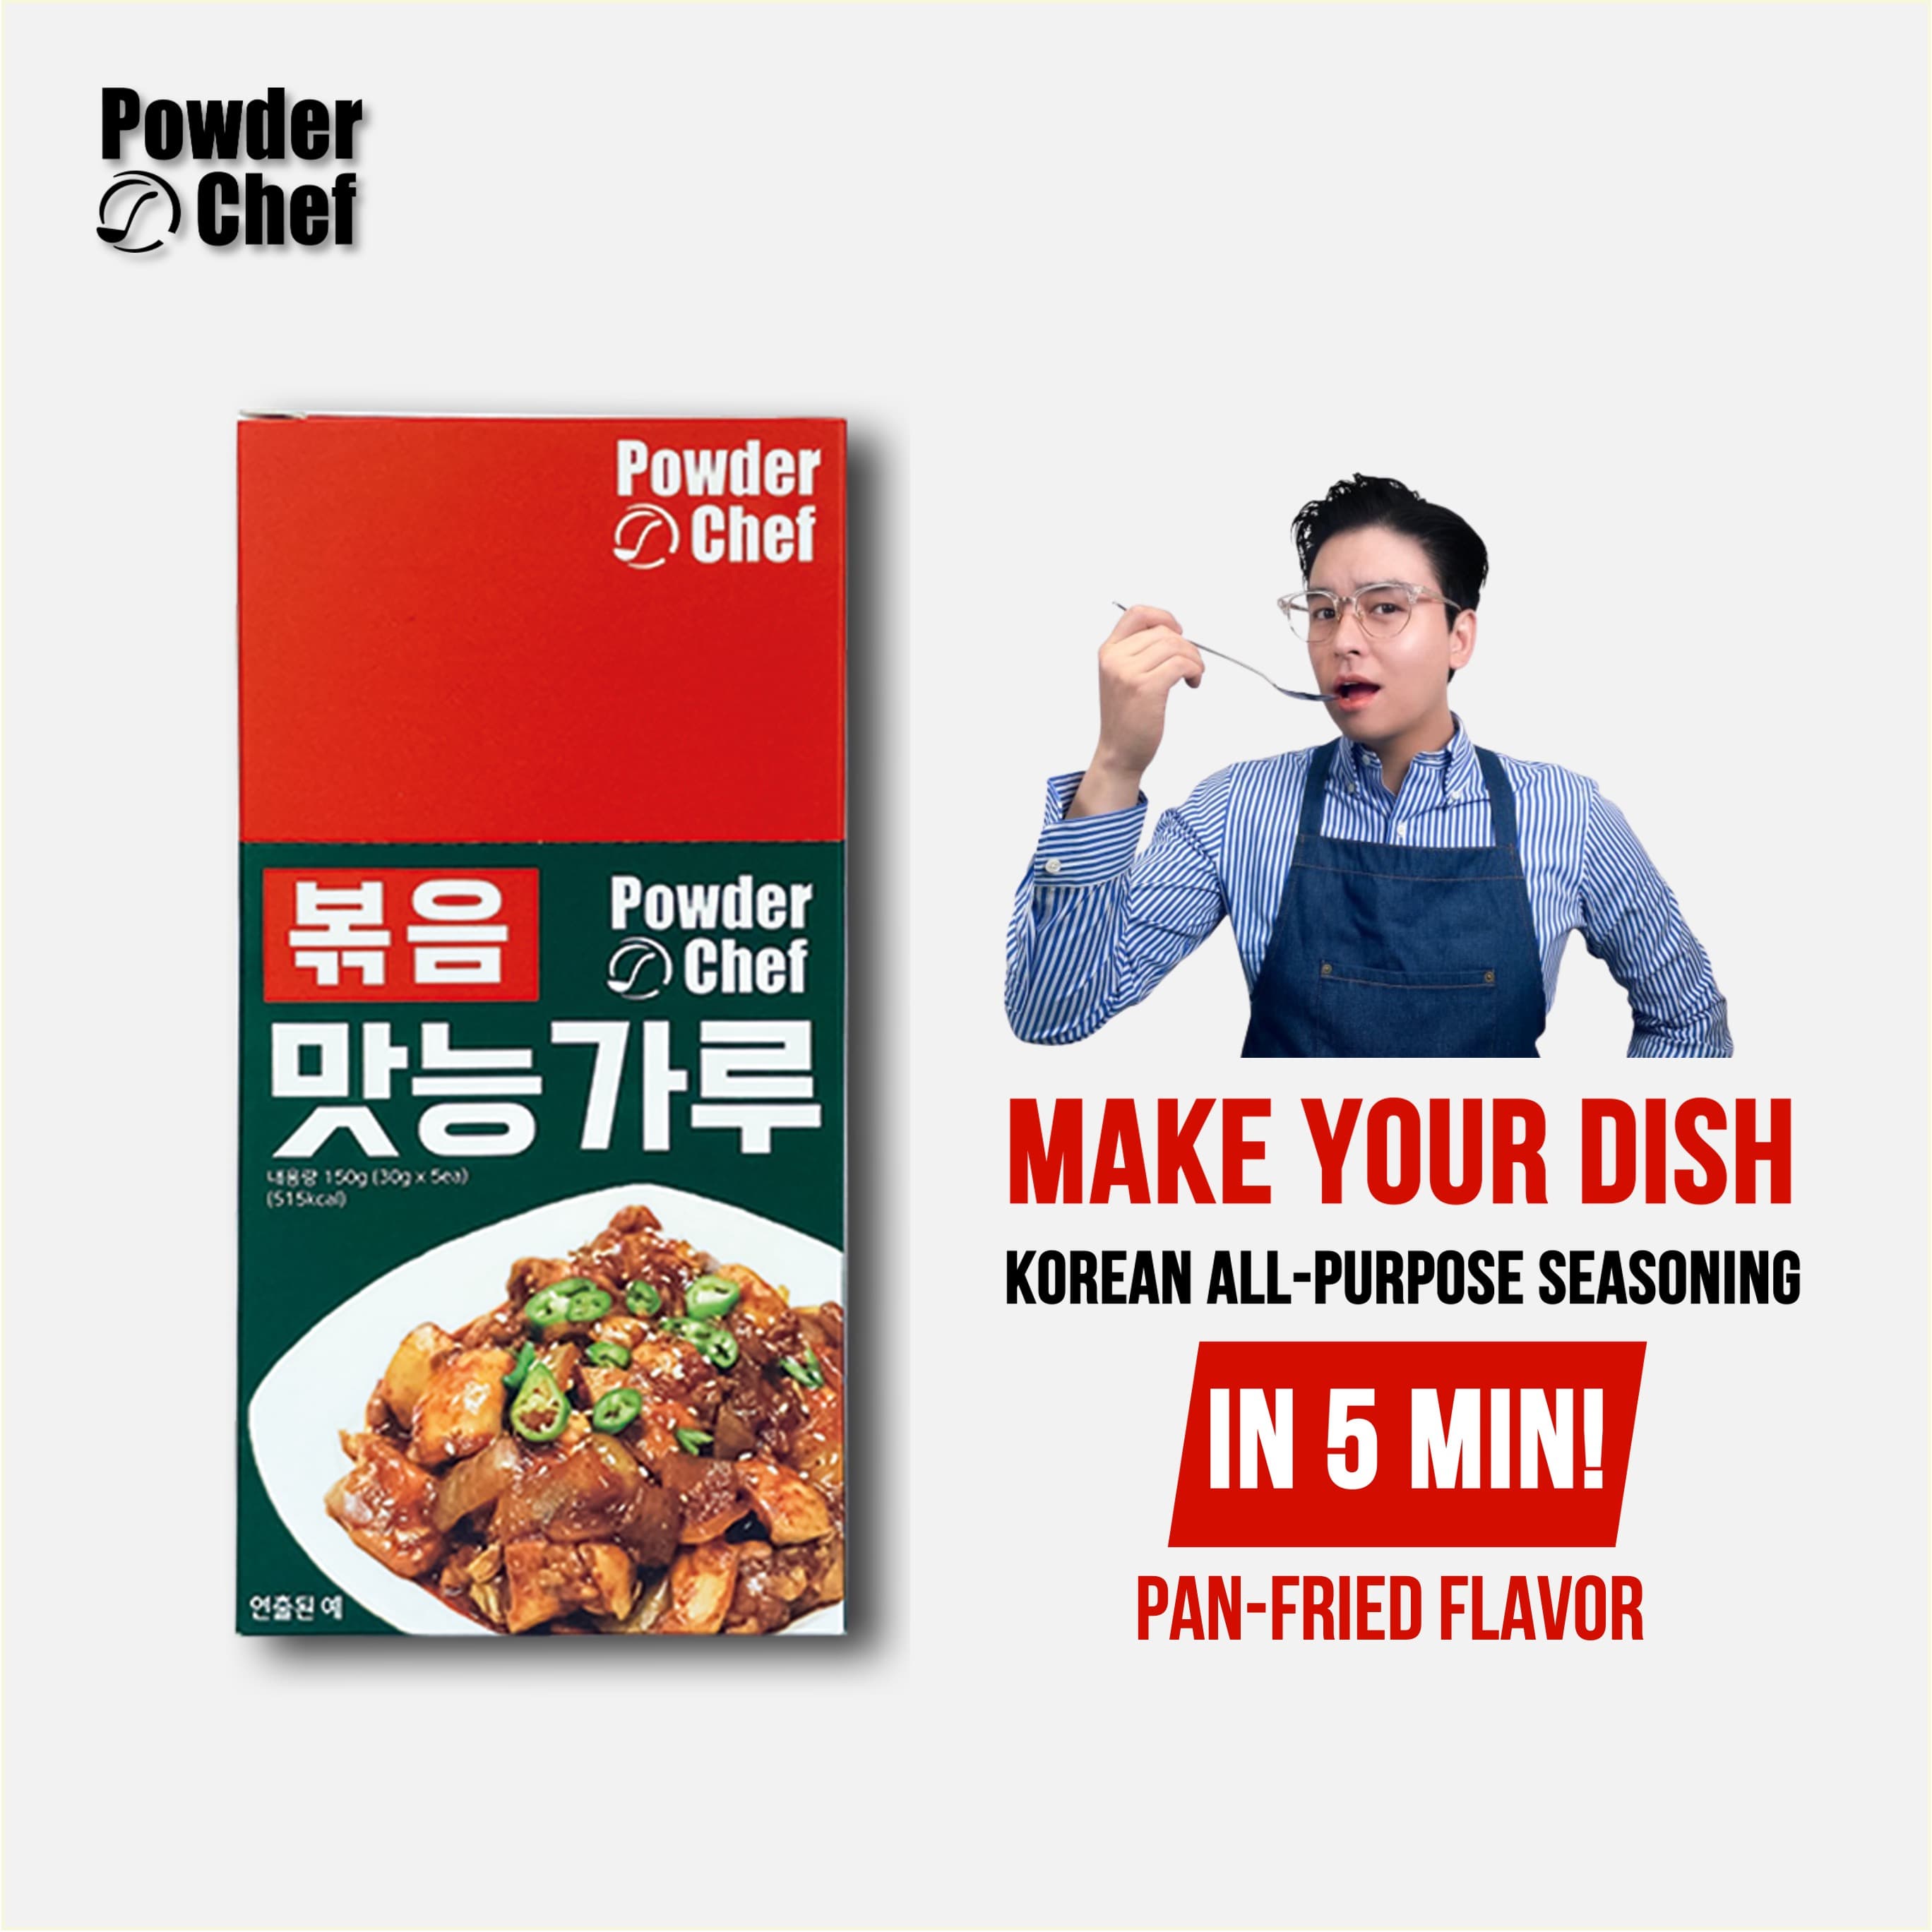 Korean seasoning all_purpose food cooking powder Pan_Fried flavor based